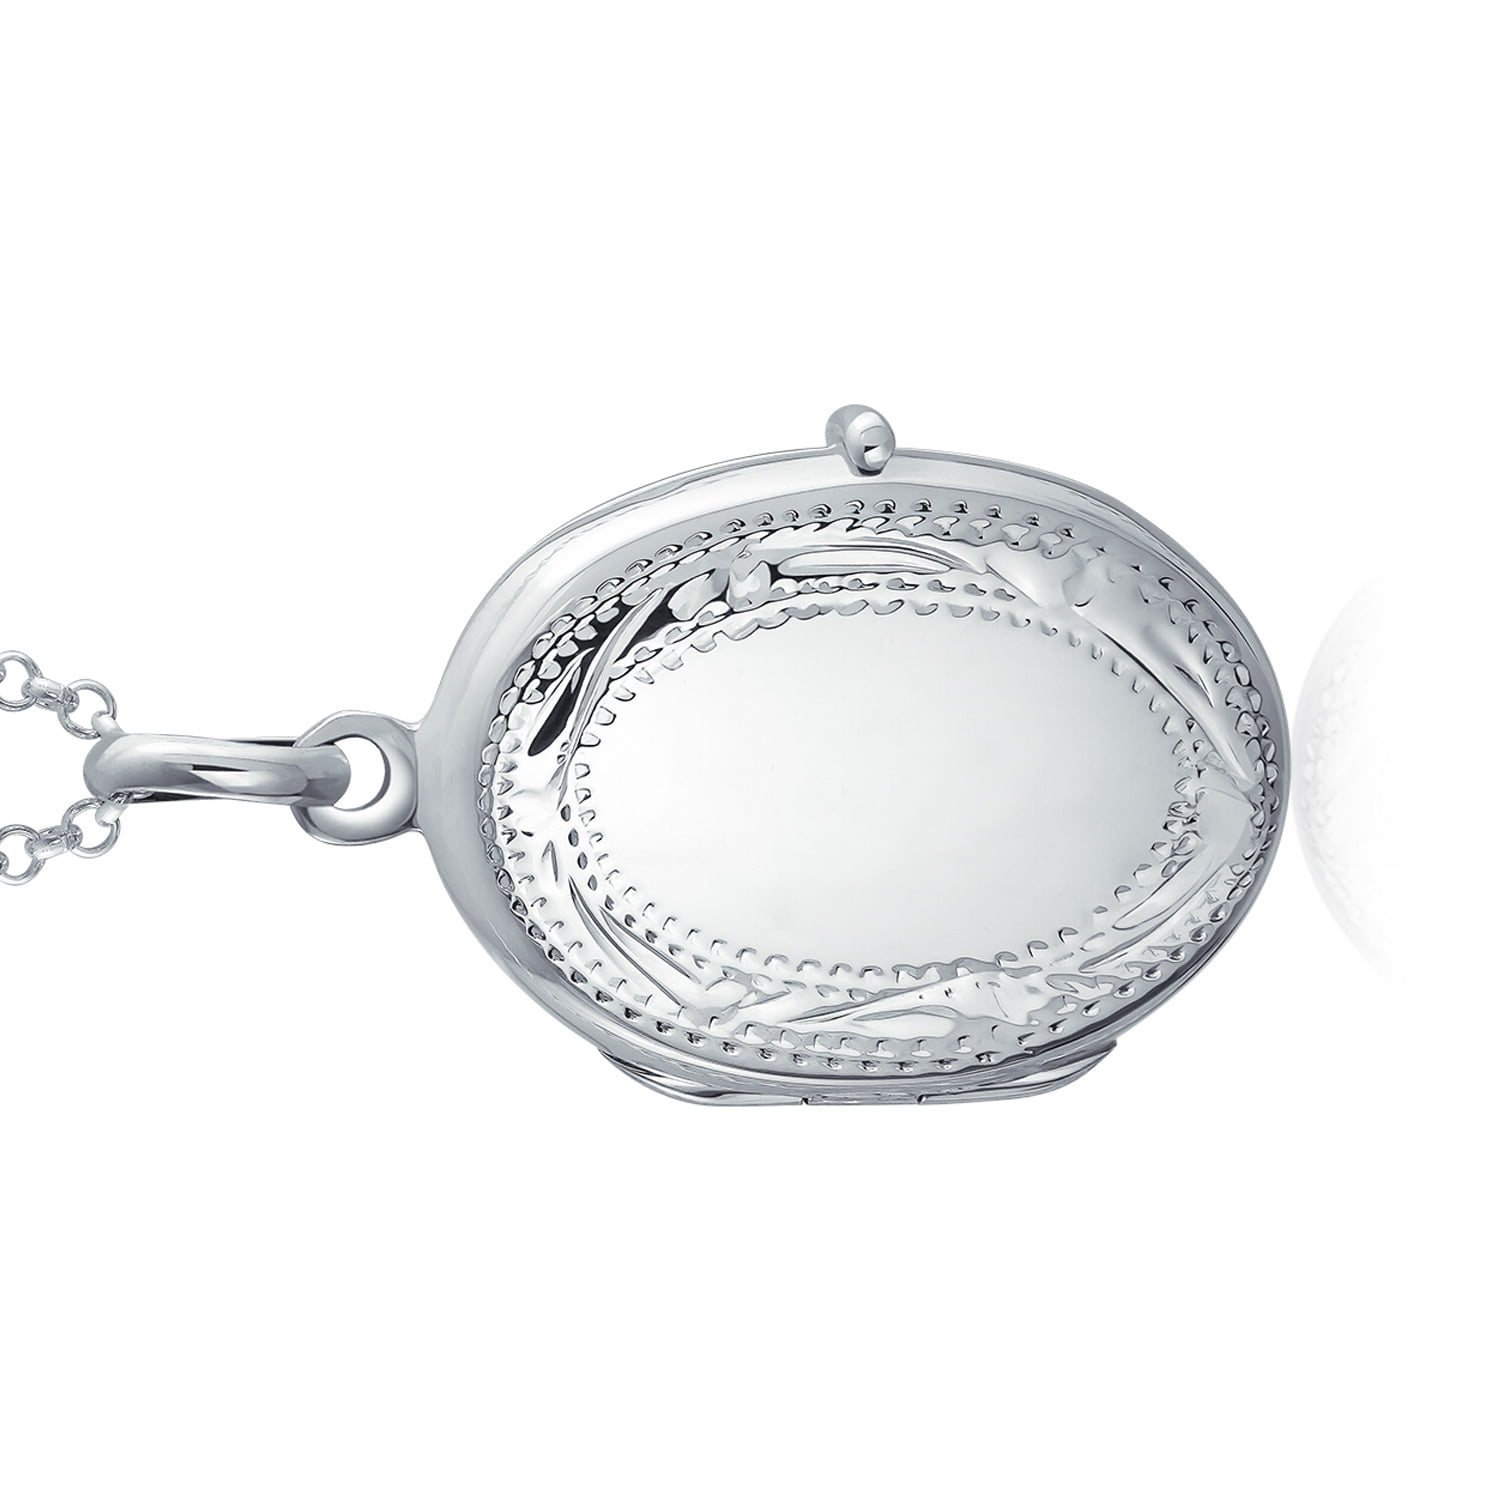 Solid 925 Sterling Silver Vintage Oval Locket Necklace for Hair, Photo,  Keepsake